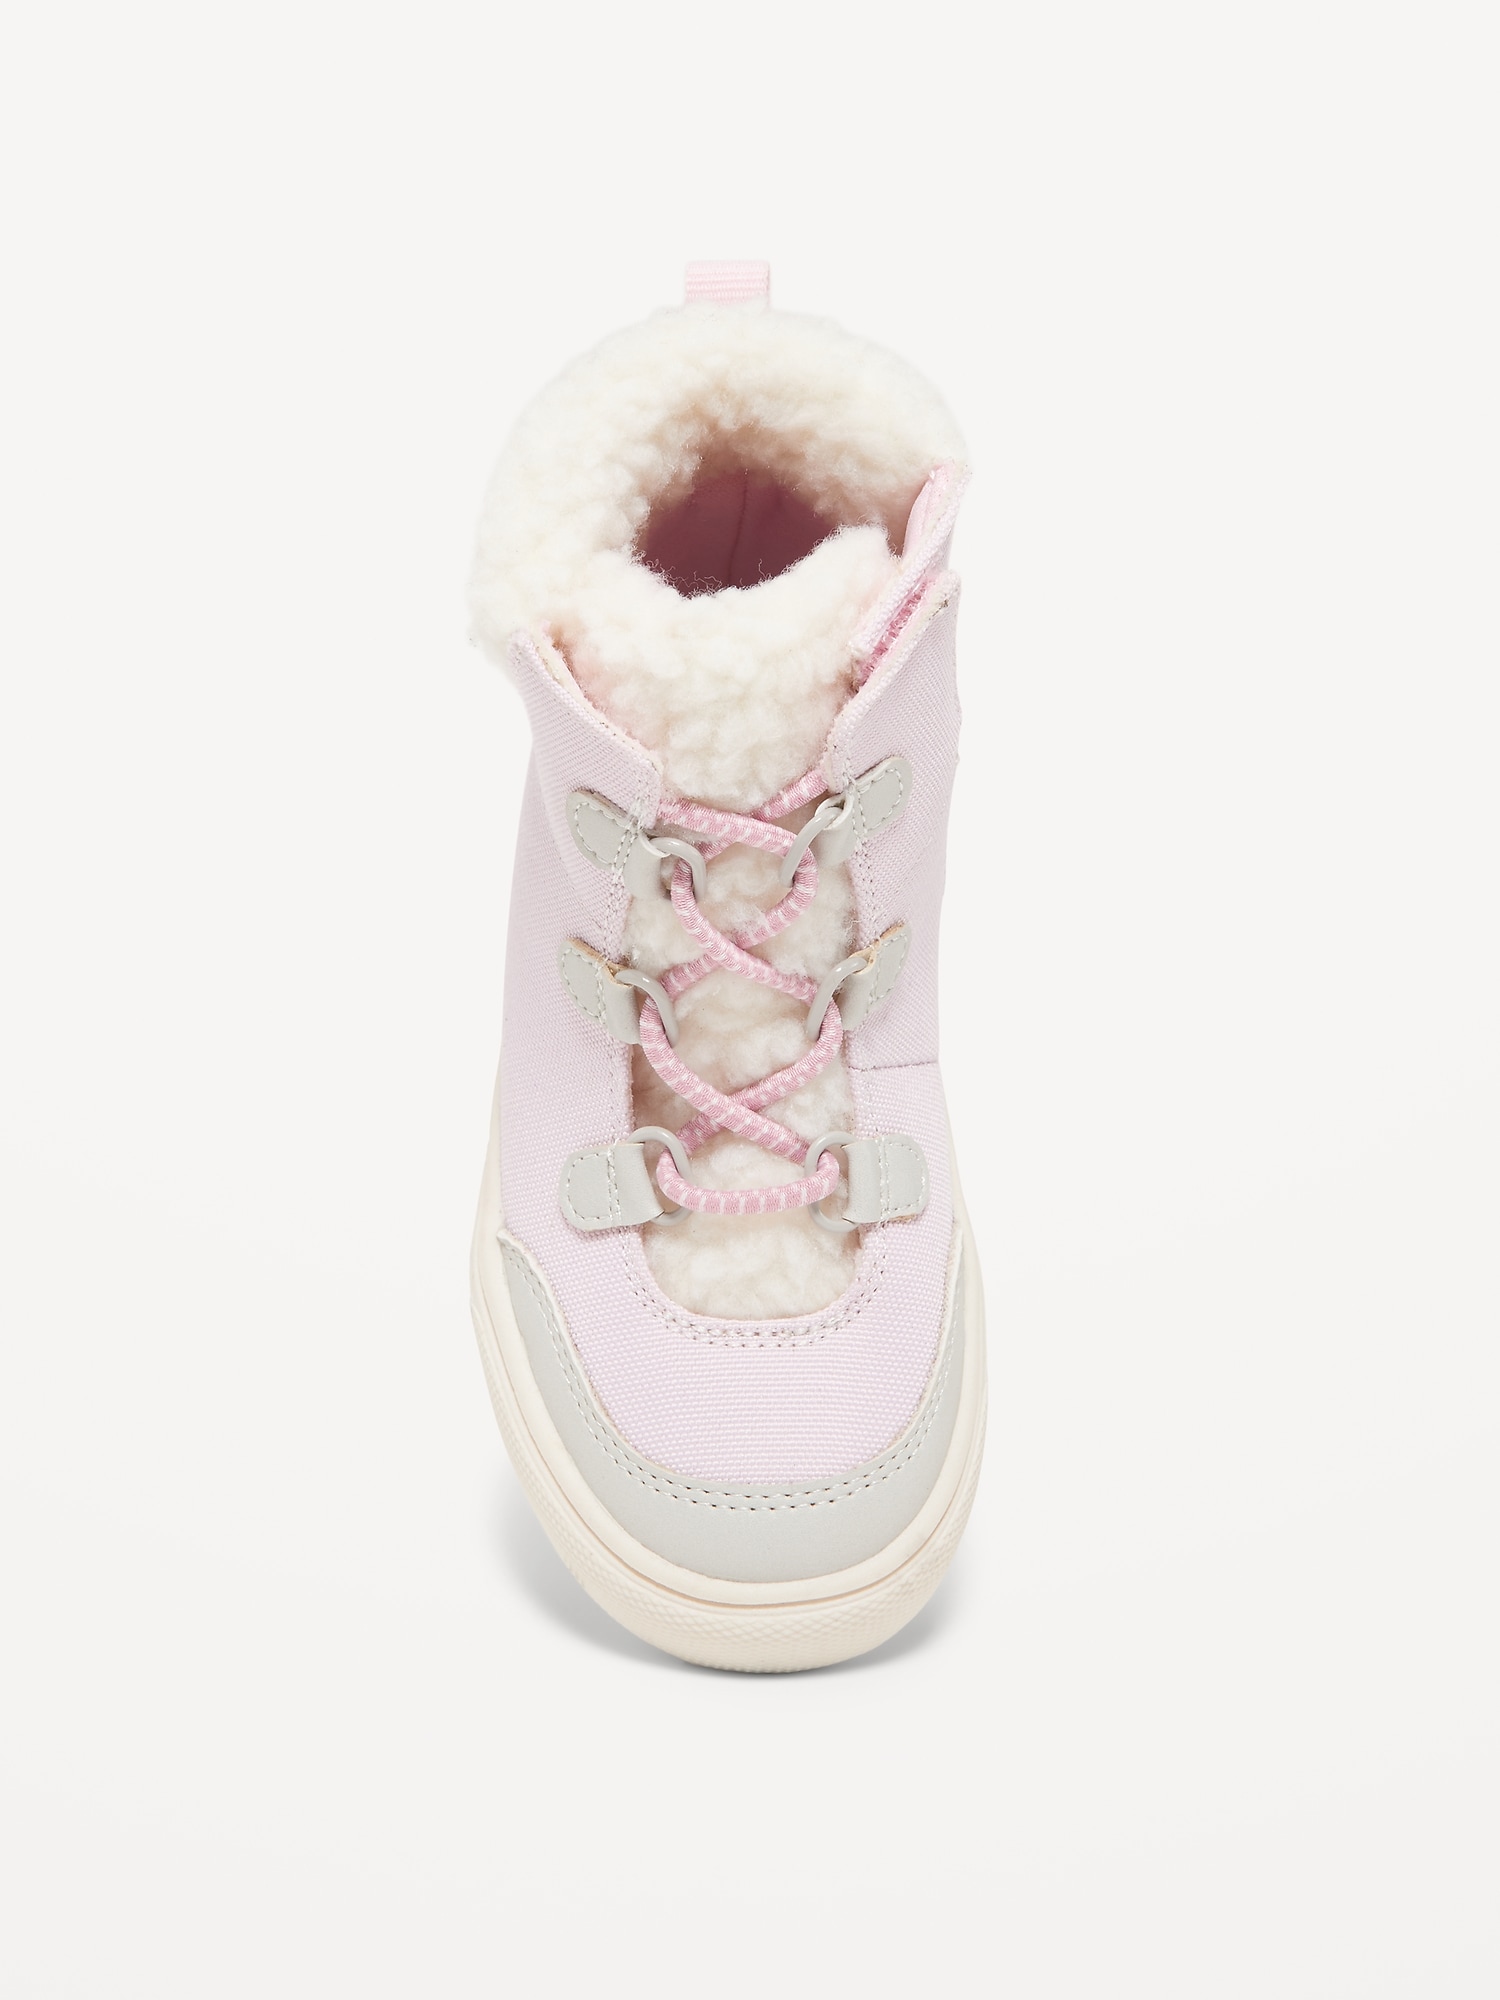 nike bear presto with gel insoles for kids shoes - nike bear roshe girls  sneaker boots size women Christmas DV2757 - 003